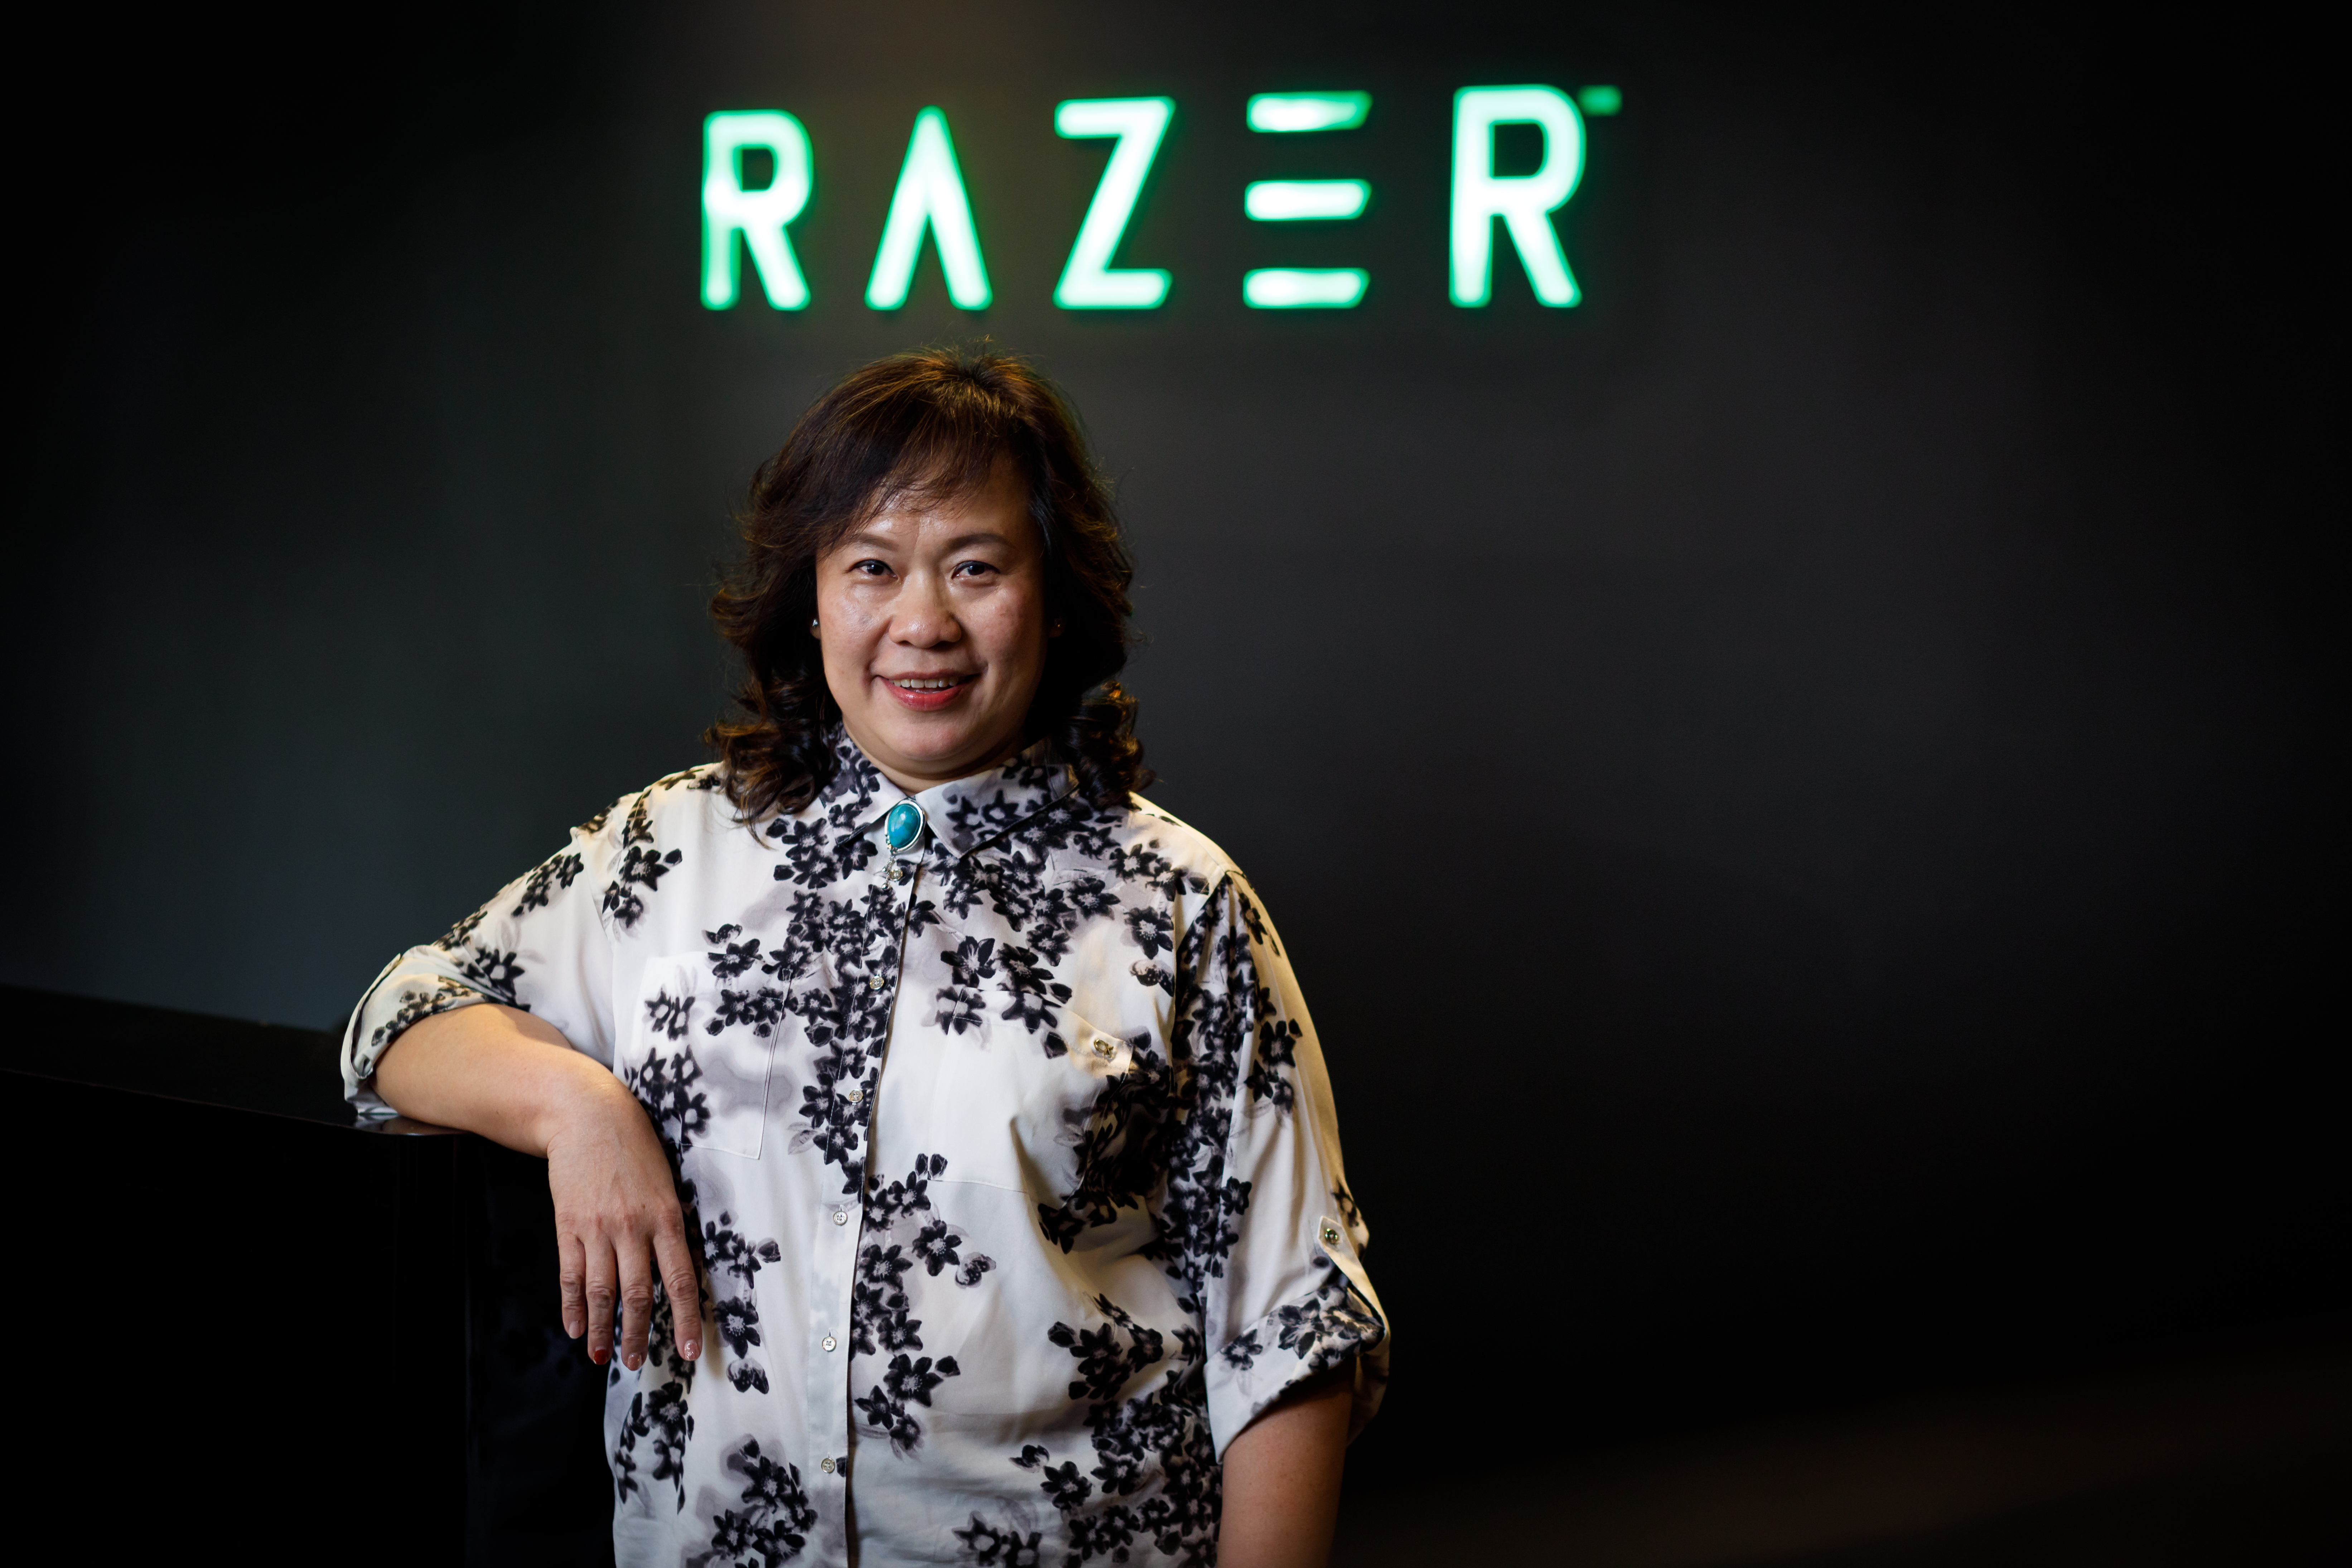 Razer's Chief of Staff Patricia Liu